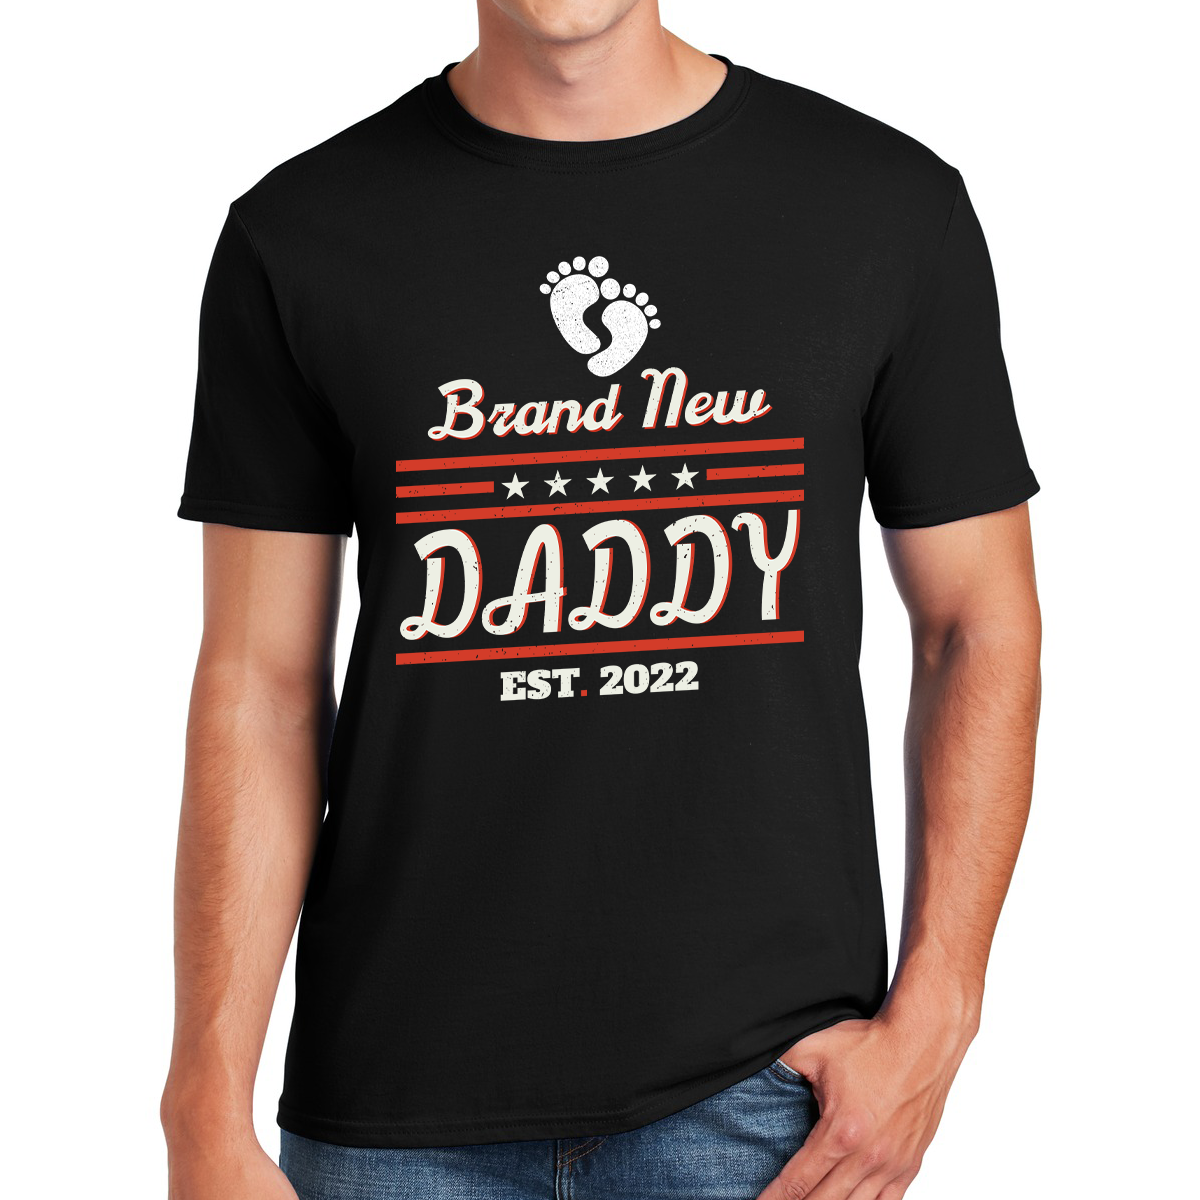 Brand New Daddy Est. 2022 Celebrating Fatherhood Awesome Dad T-shirt